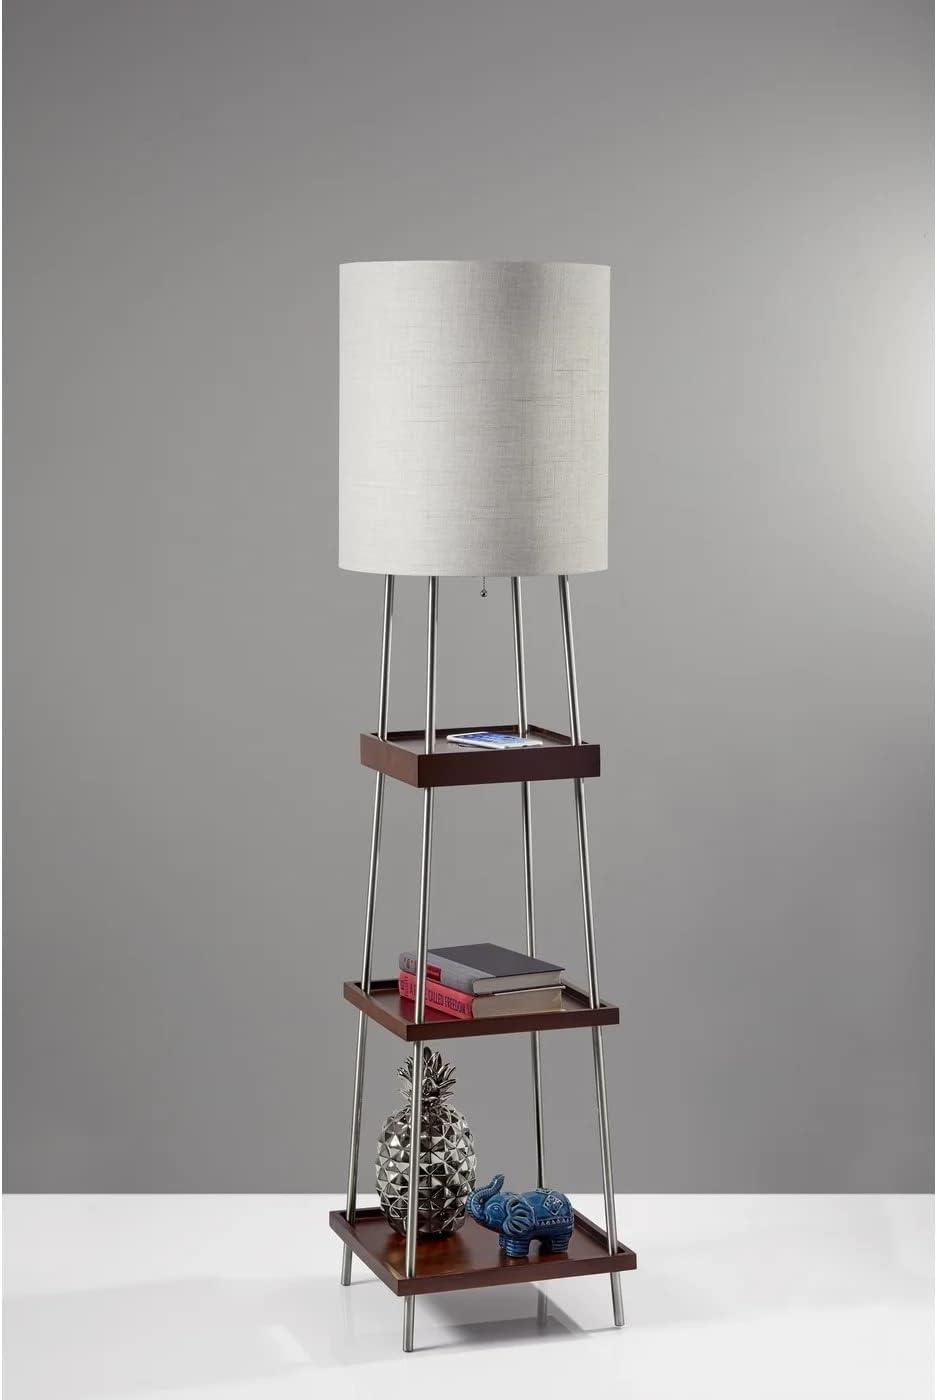 Elegant White Textured Fabric Shelf Floor Lamp with Wireless Charging